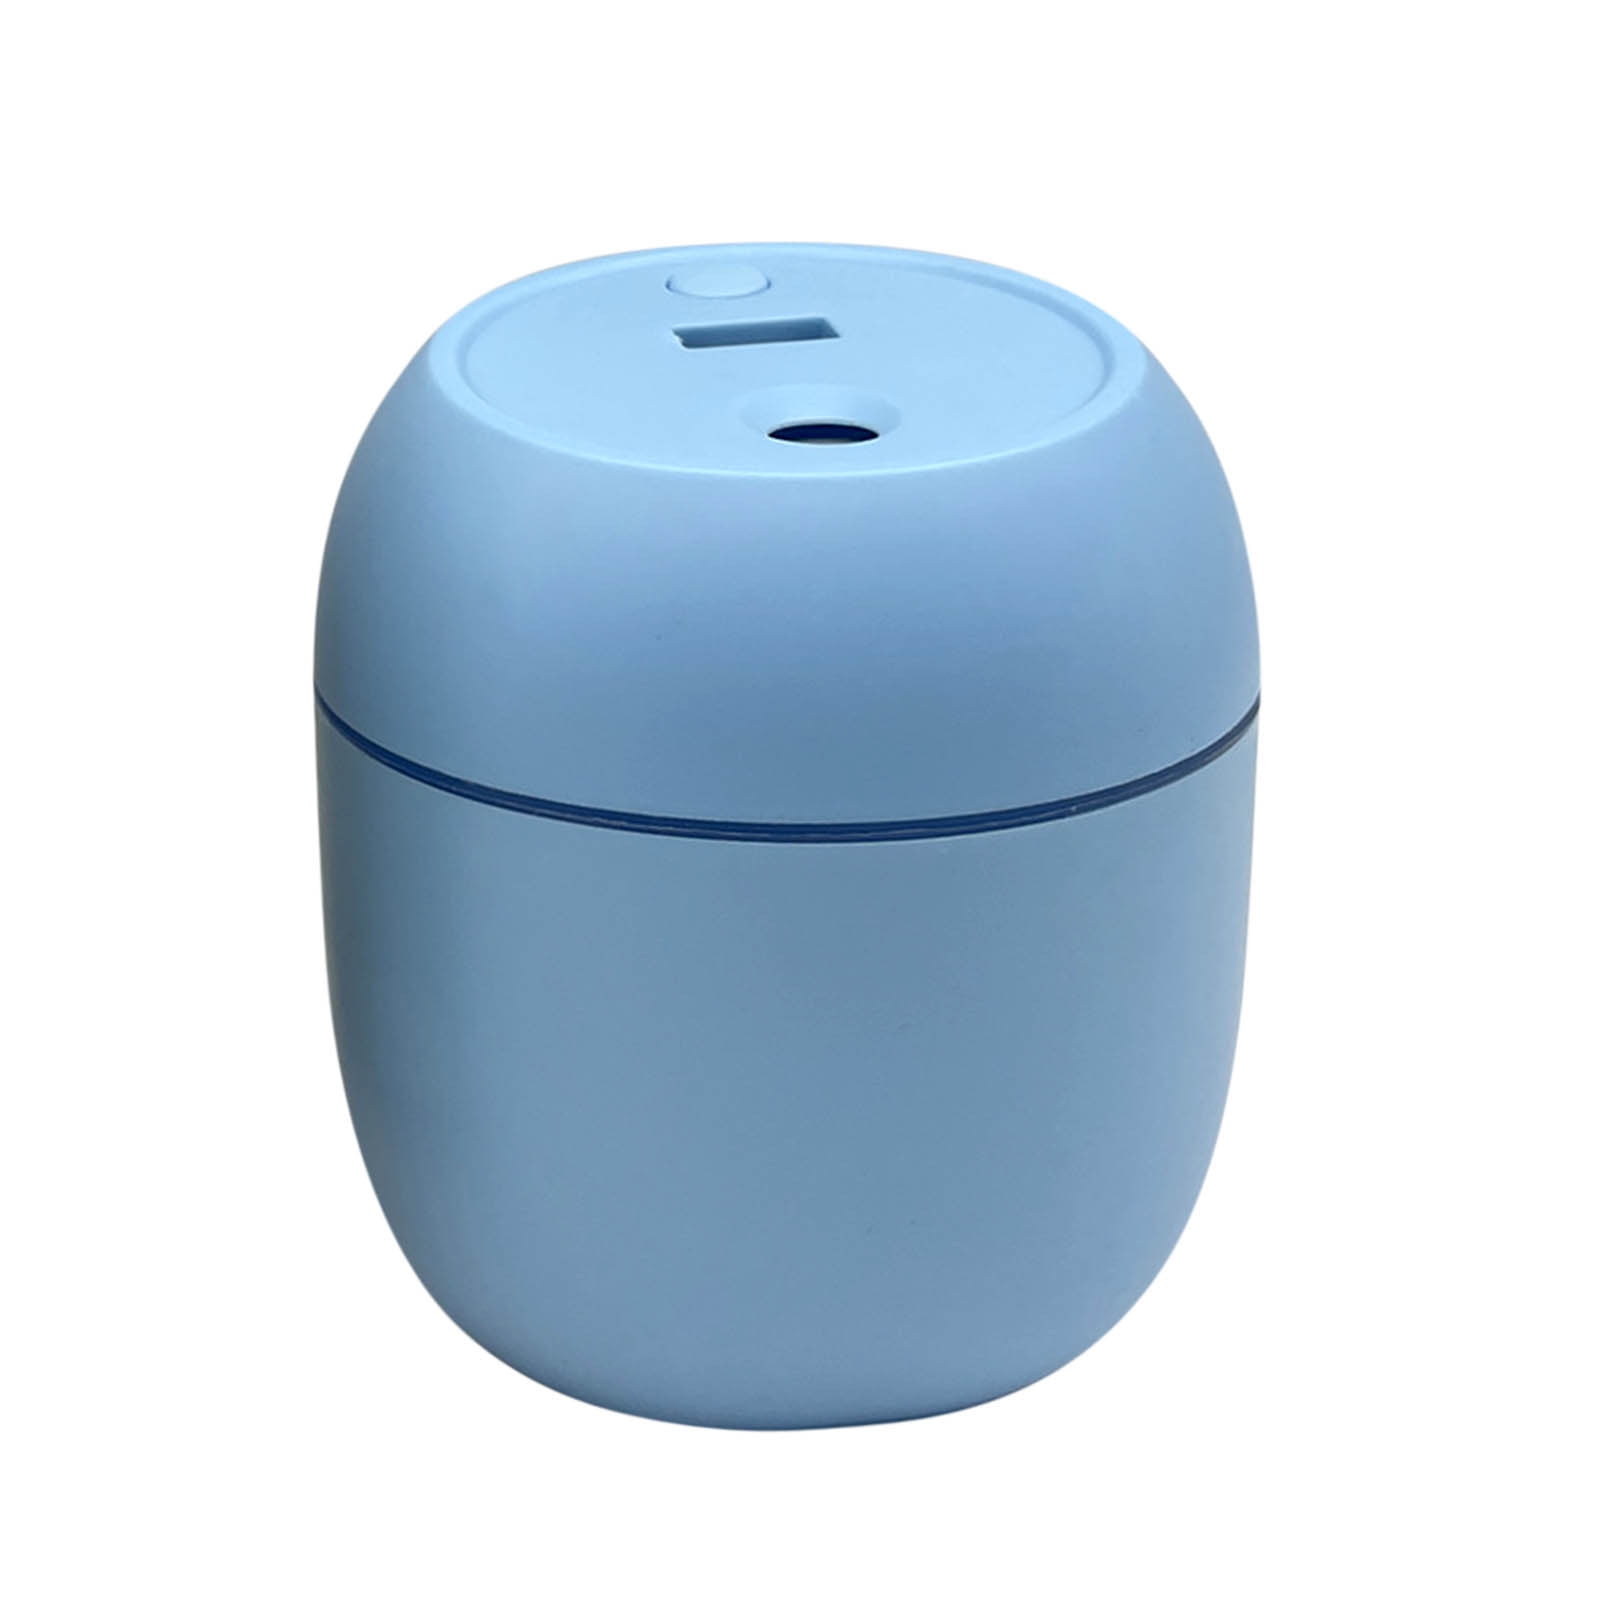 Buy Wholesale China Hand Held Tabletop Small Humidifier Warm Led Light  Portable Mini Air Humidifier For Bedroom & Humidifier at USD 7.65